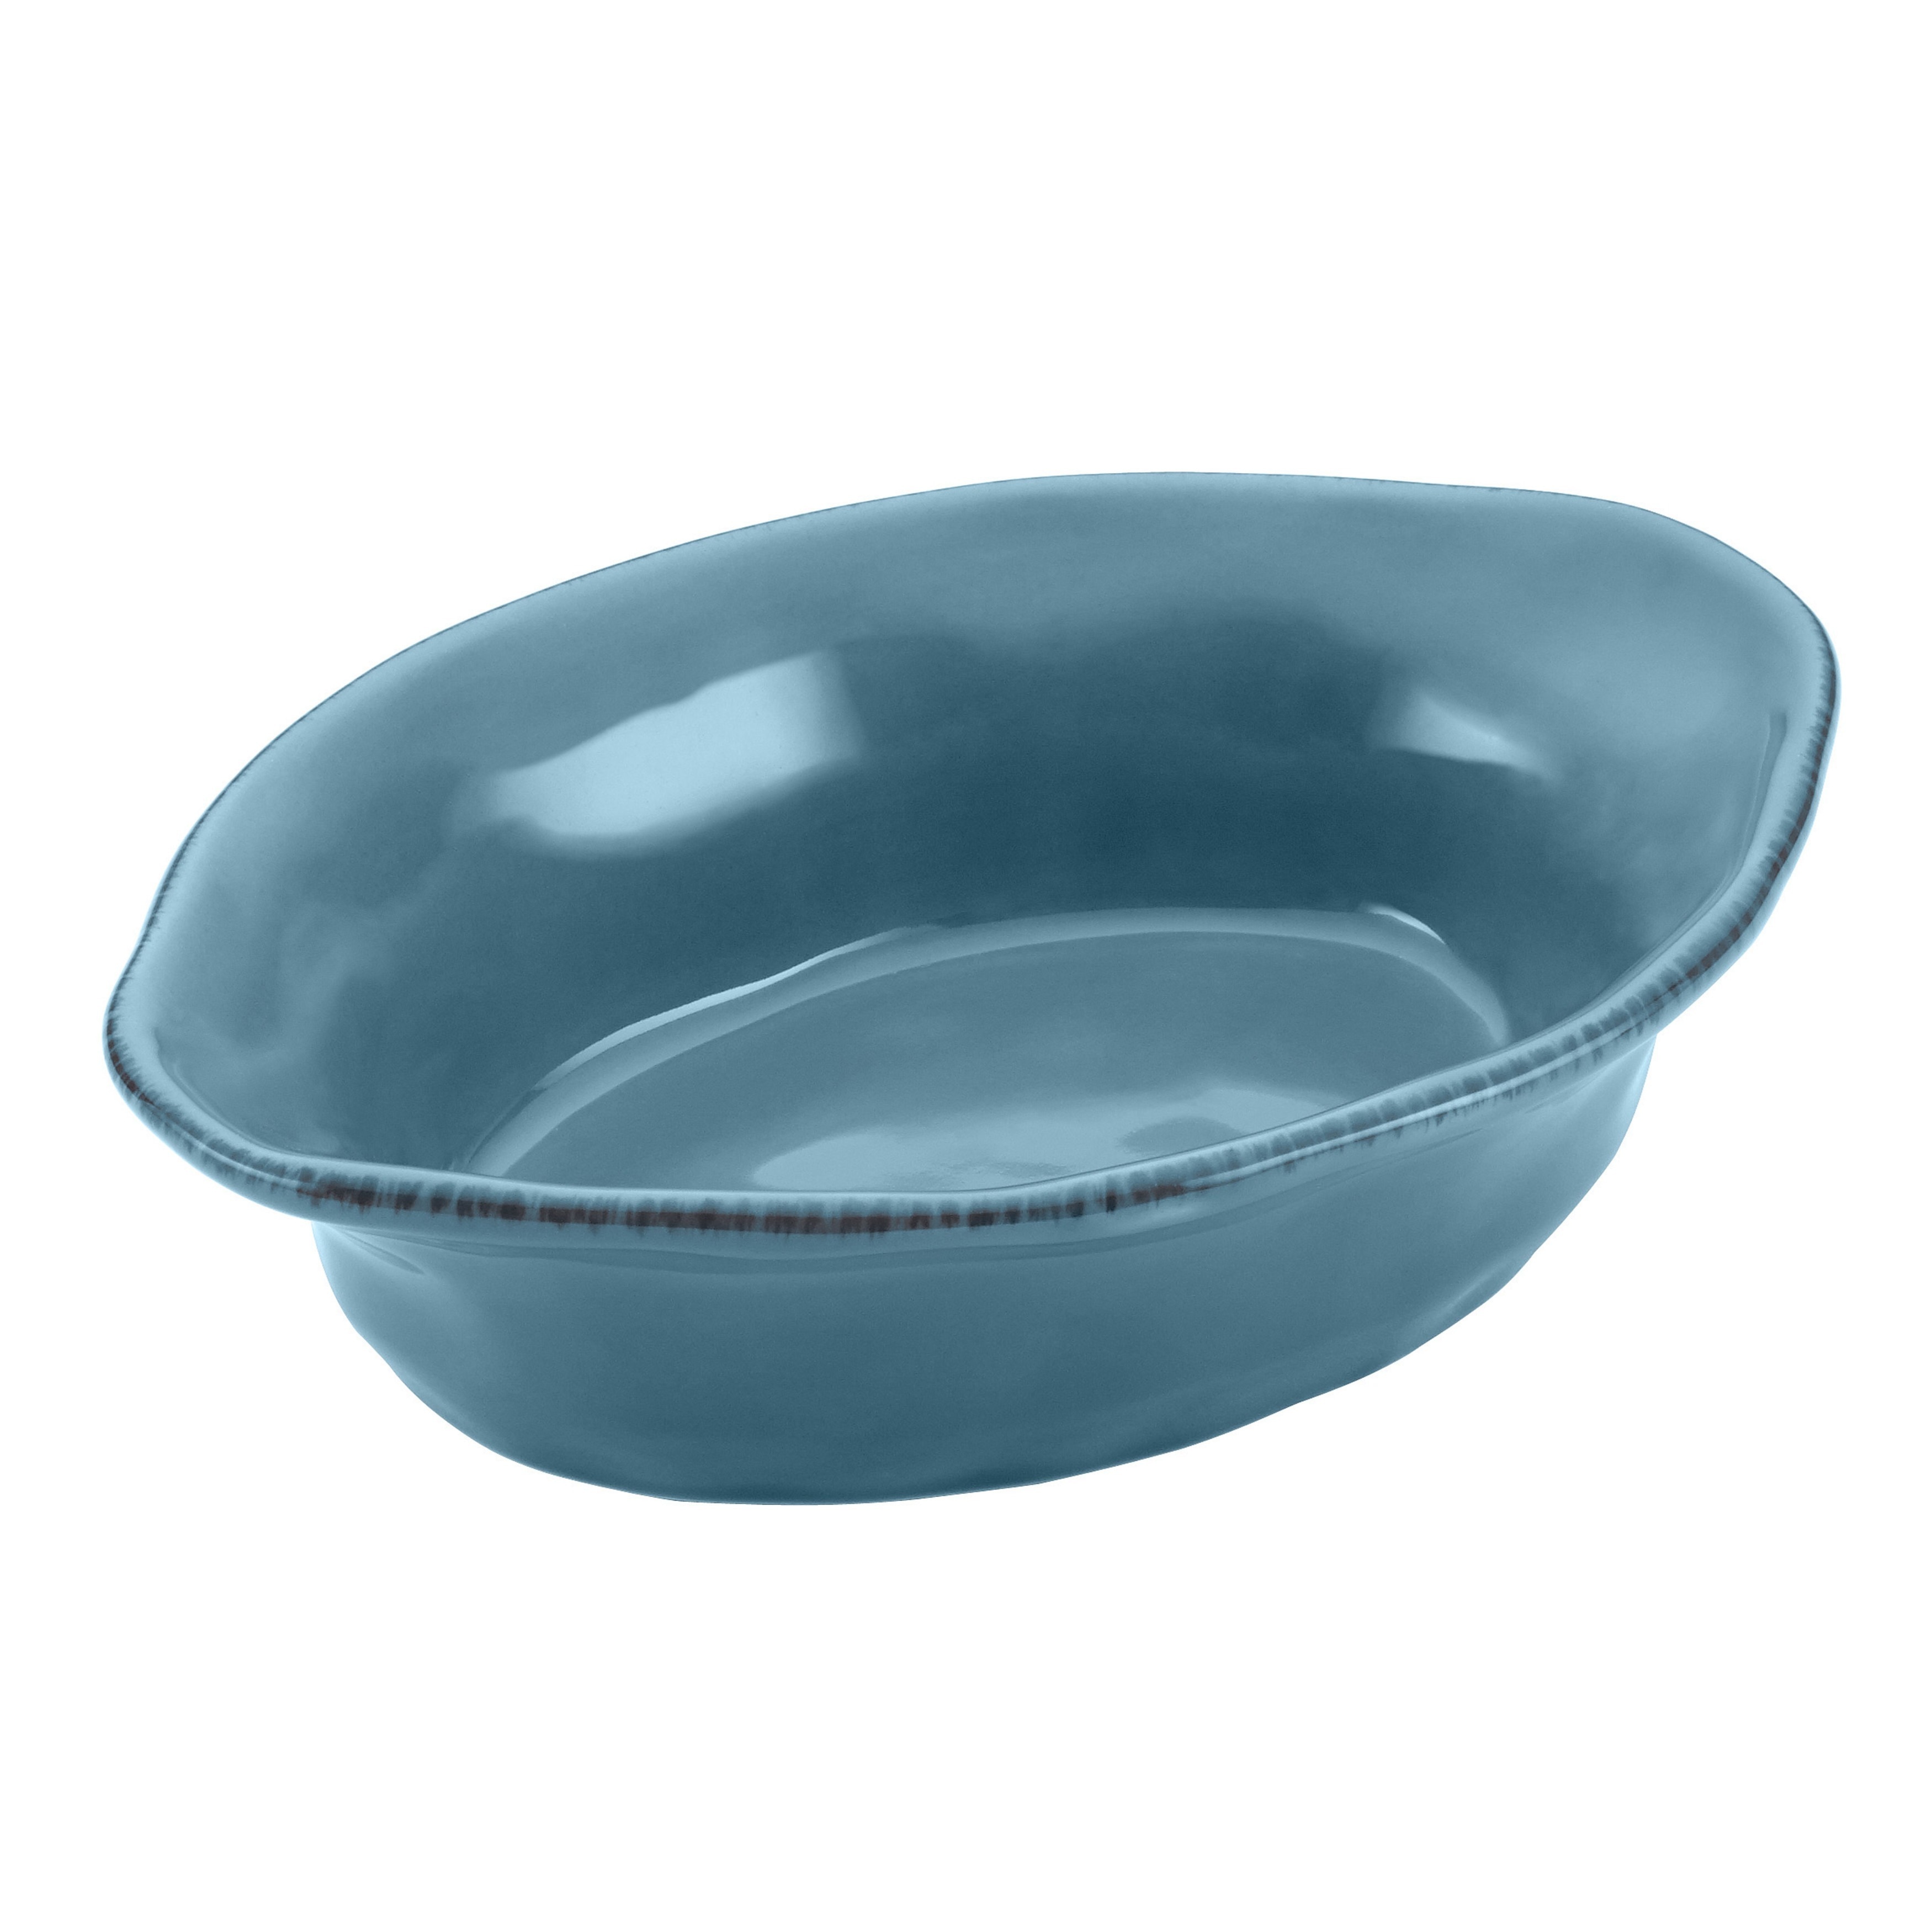 Rachael Ray Cucina Stoneware 2-Quart Oval Baker Agave Blue